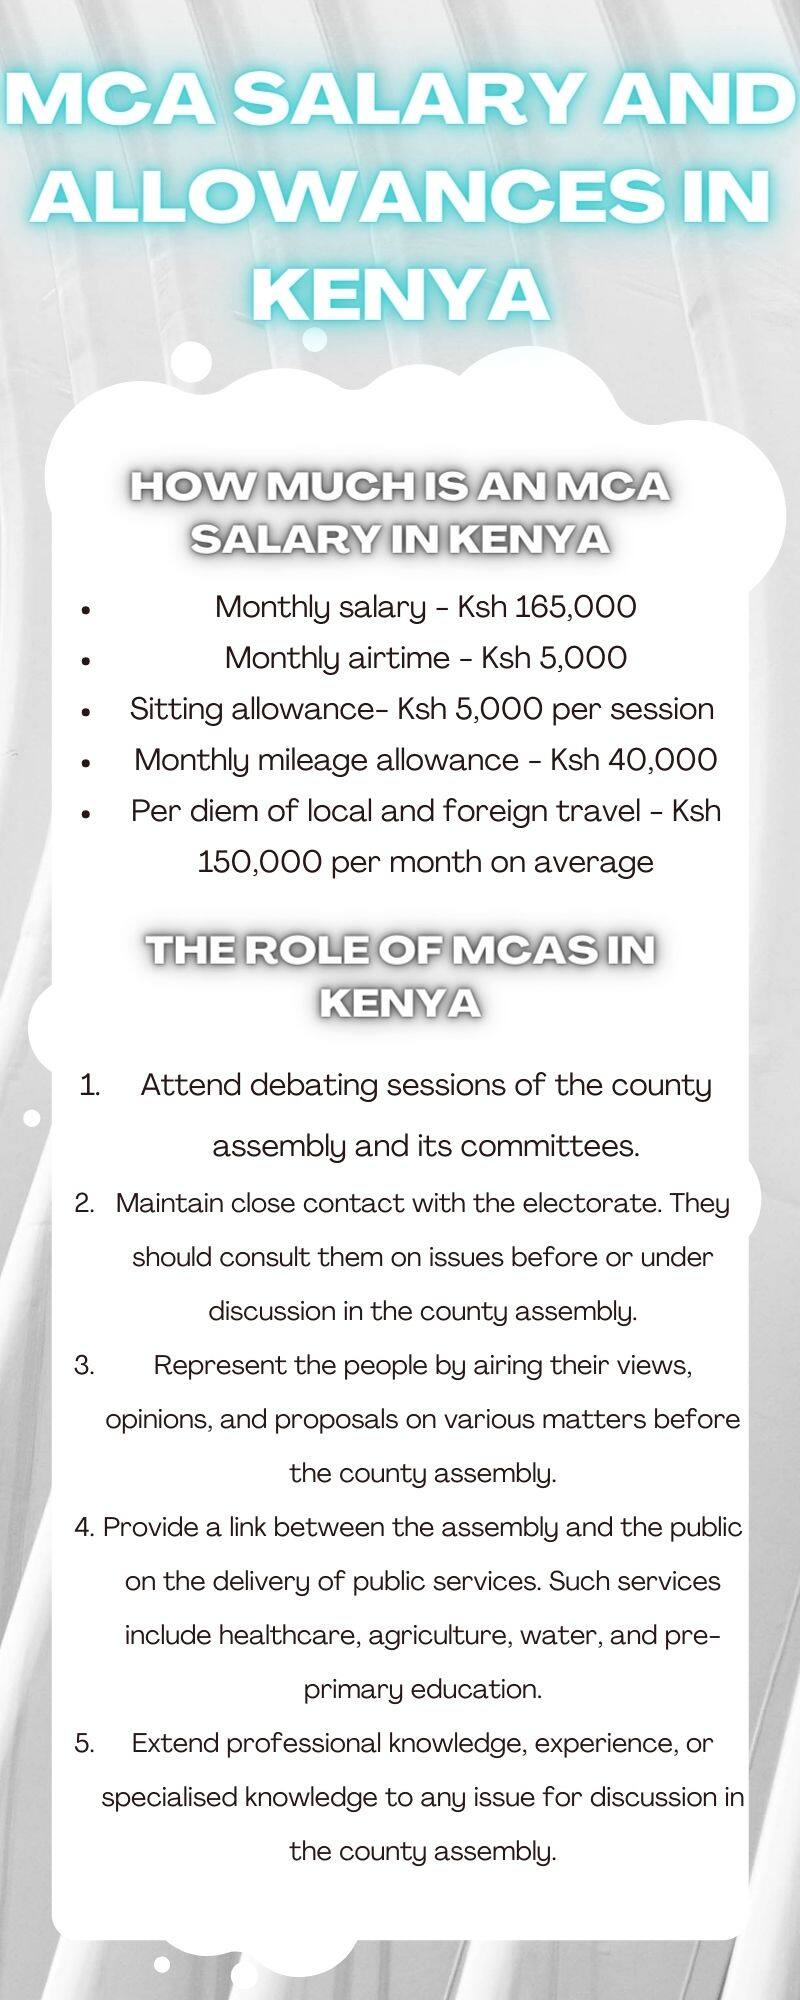 MCA salary and allowances in Kenya